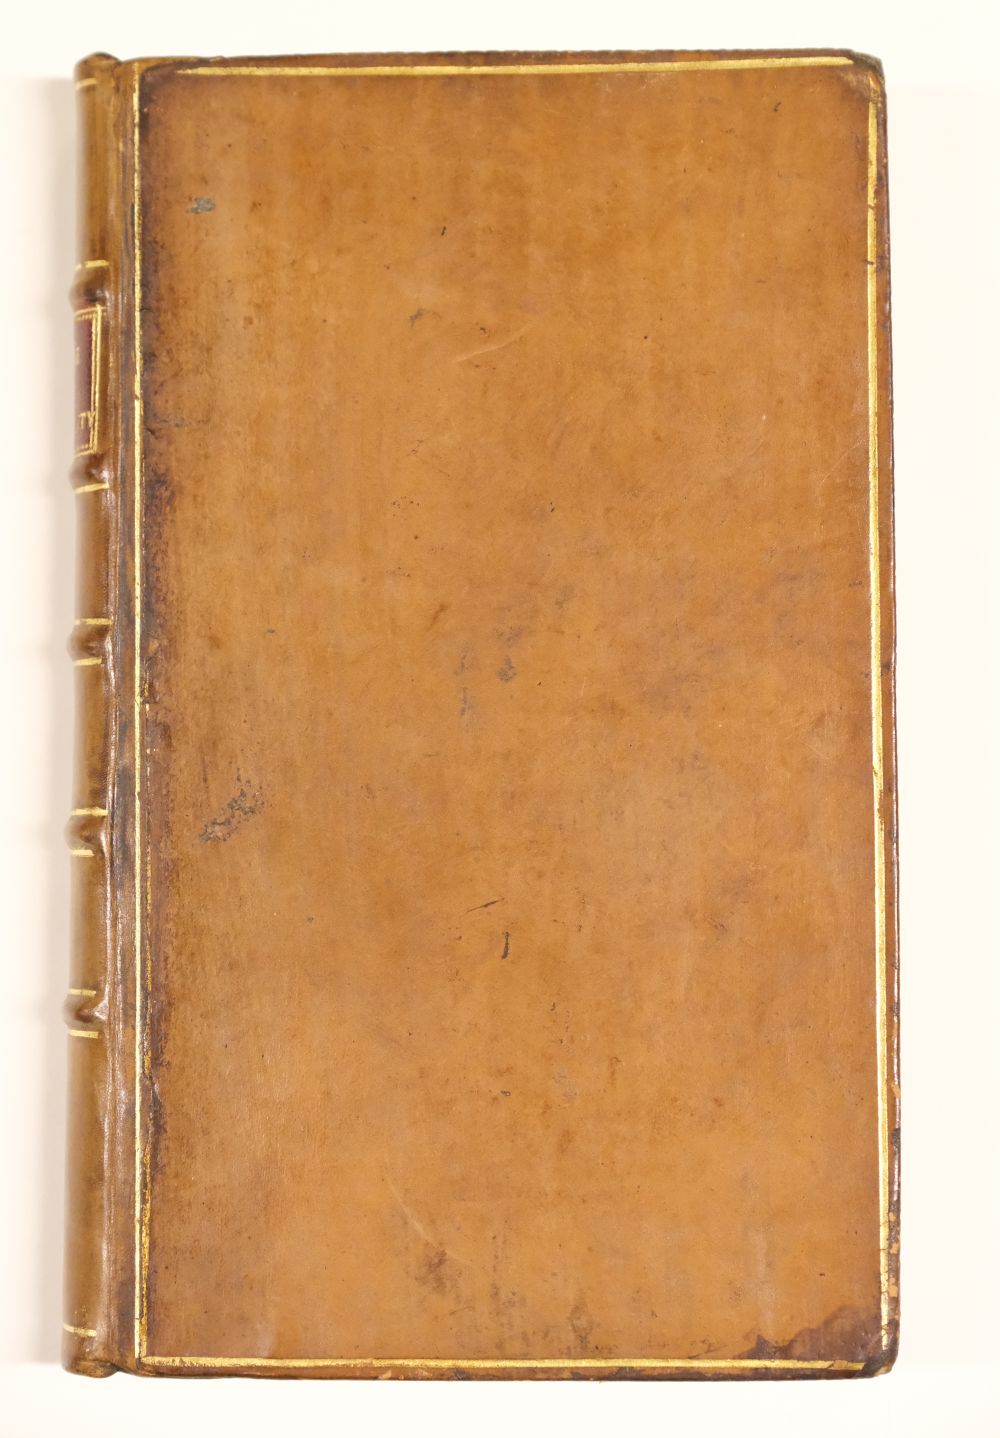 Austen, Jane. Sense and Sensibility: A Novel, 3 volumes, 1st edition, 1811 - Image 3 of 30